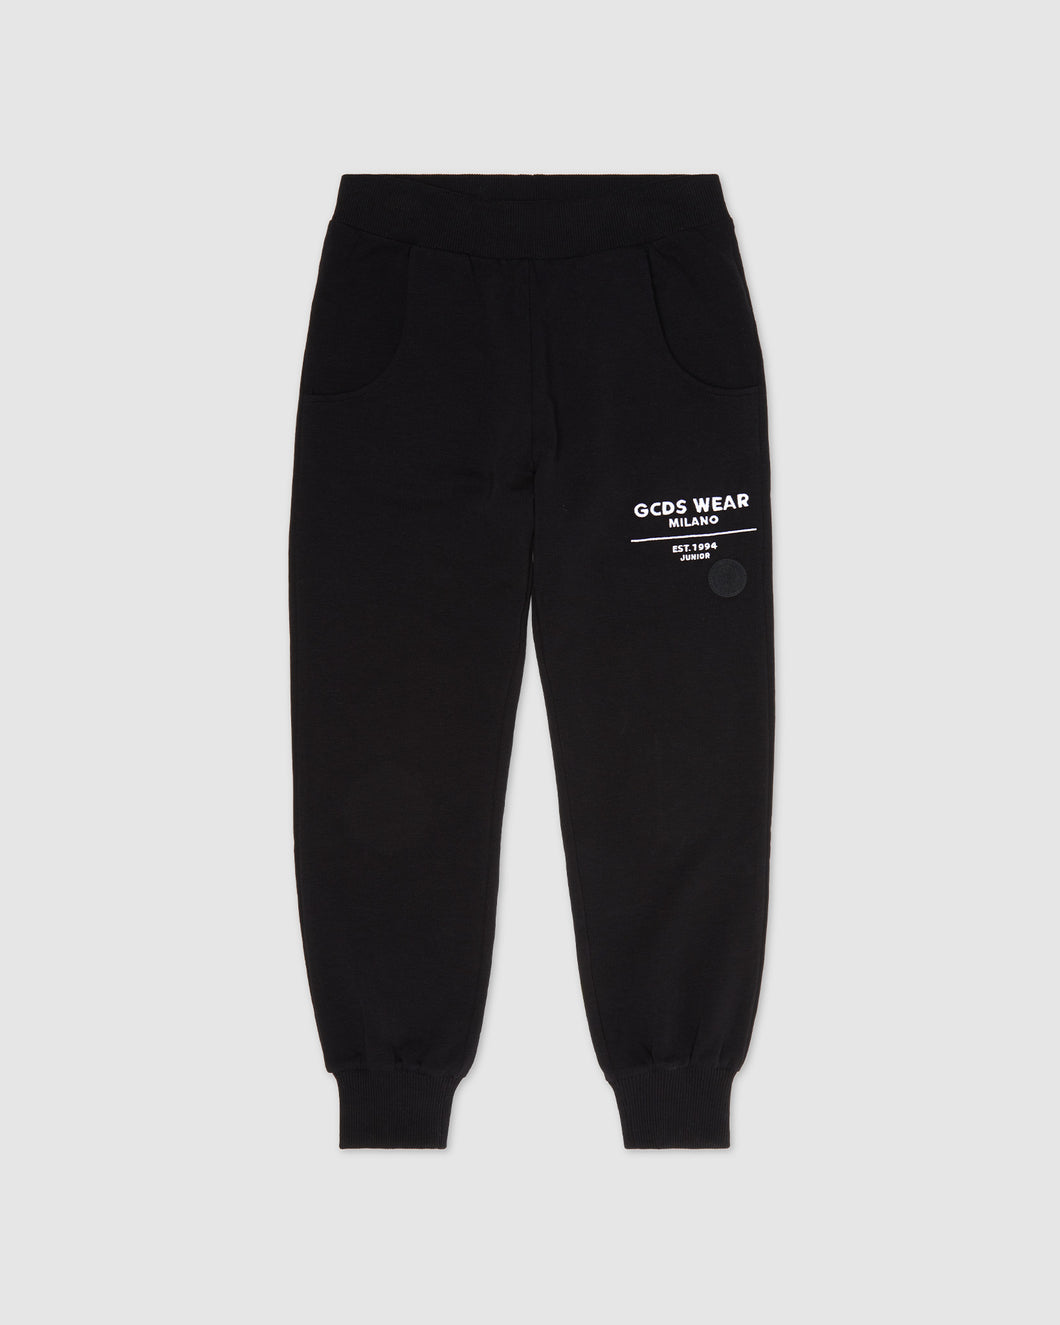 Gcds sweatbottoms: Boy Trousers Black | GCDS